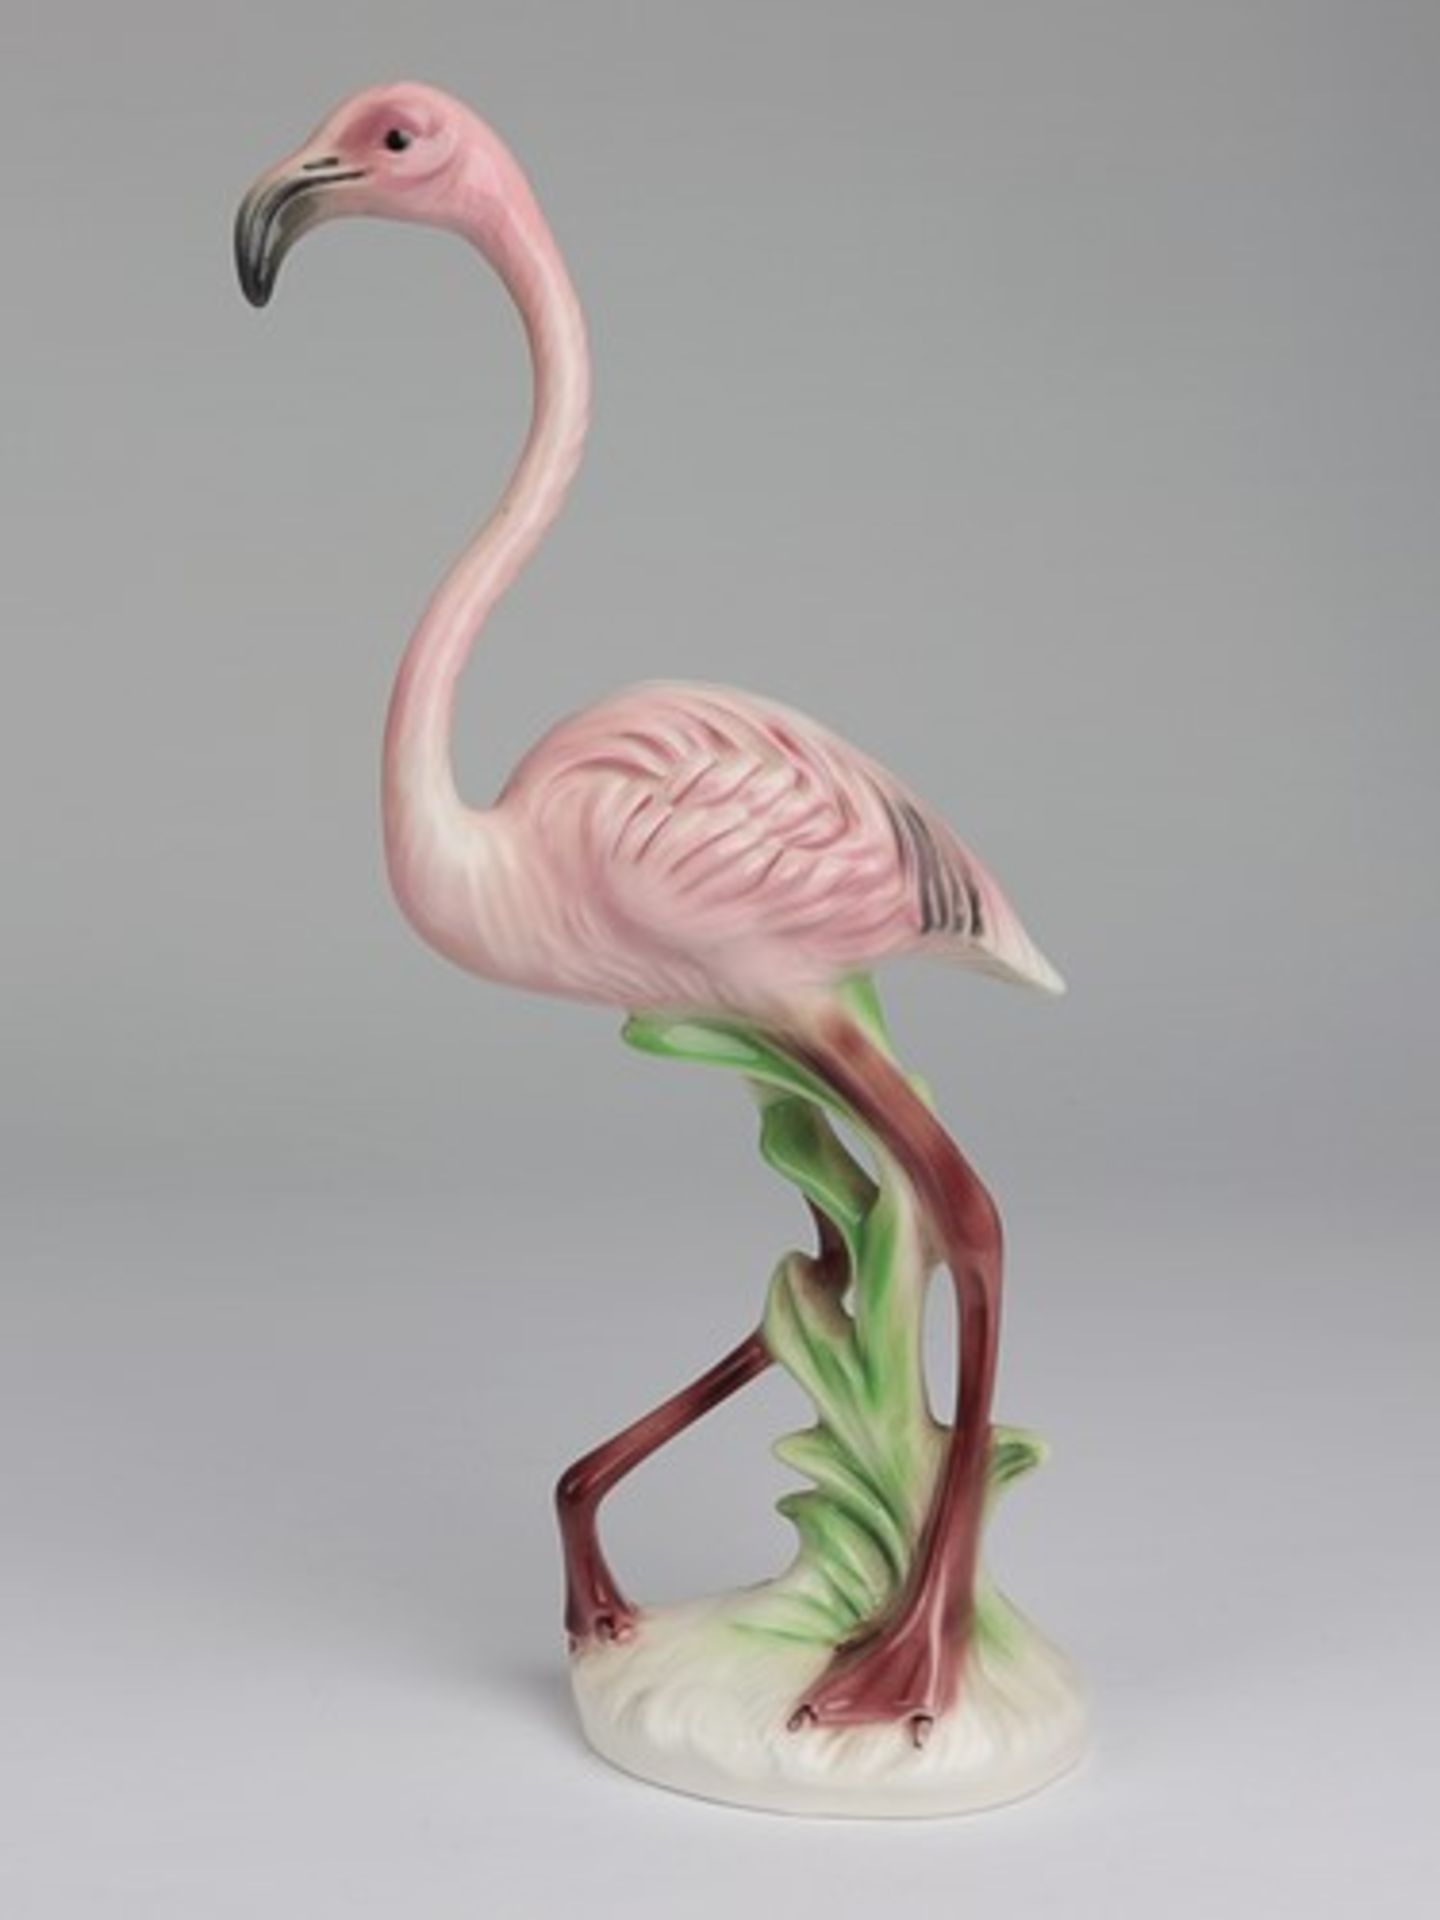 Goebel - FigurStempelmarke, Nr. 38 609 26, vollplast. Flamingo auf naturalist. Plinthe, farbig